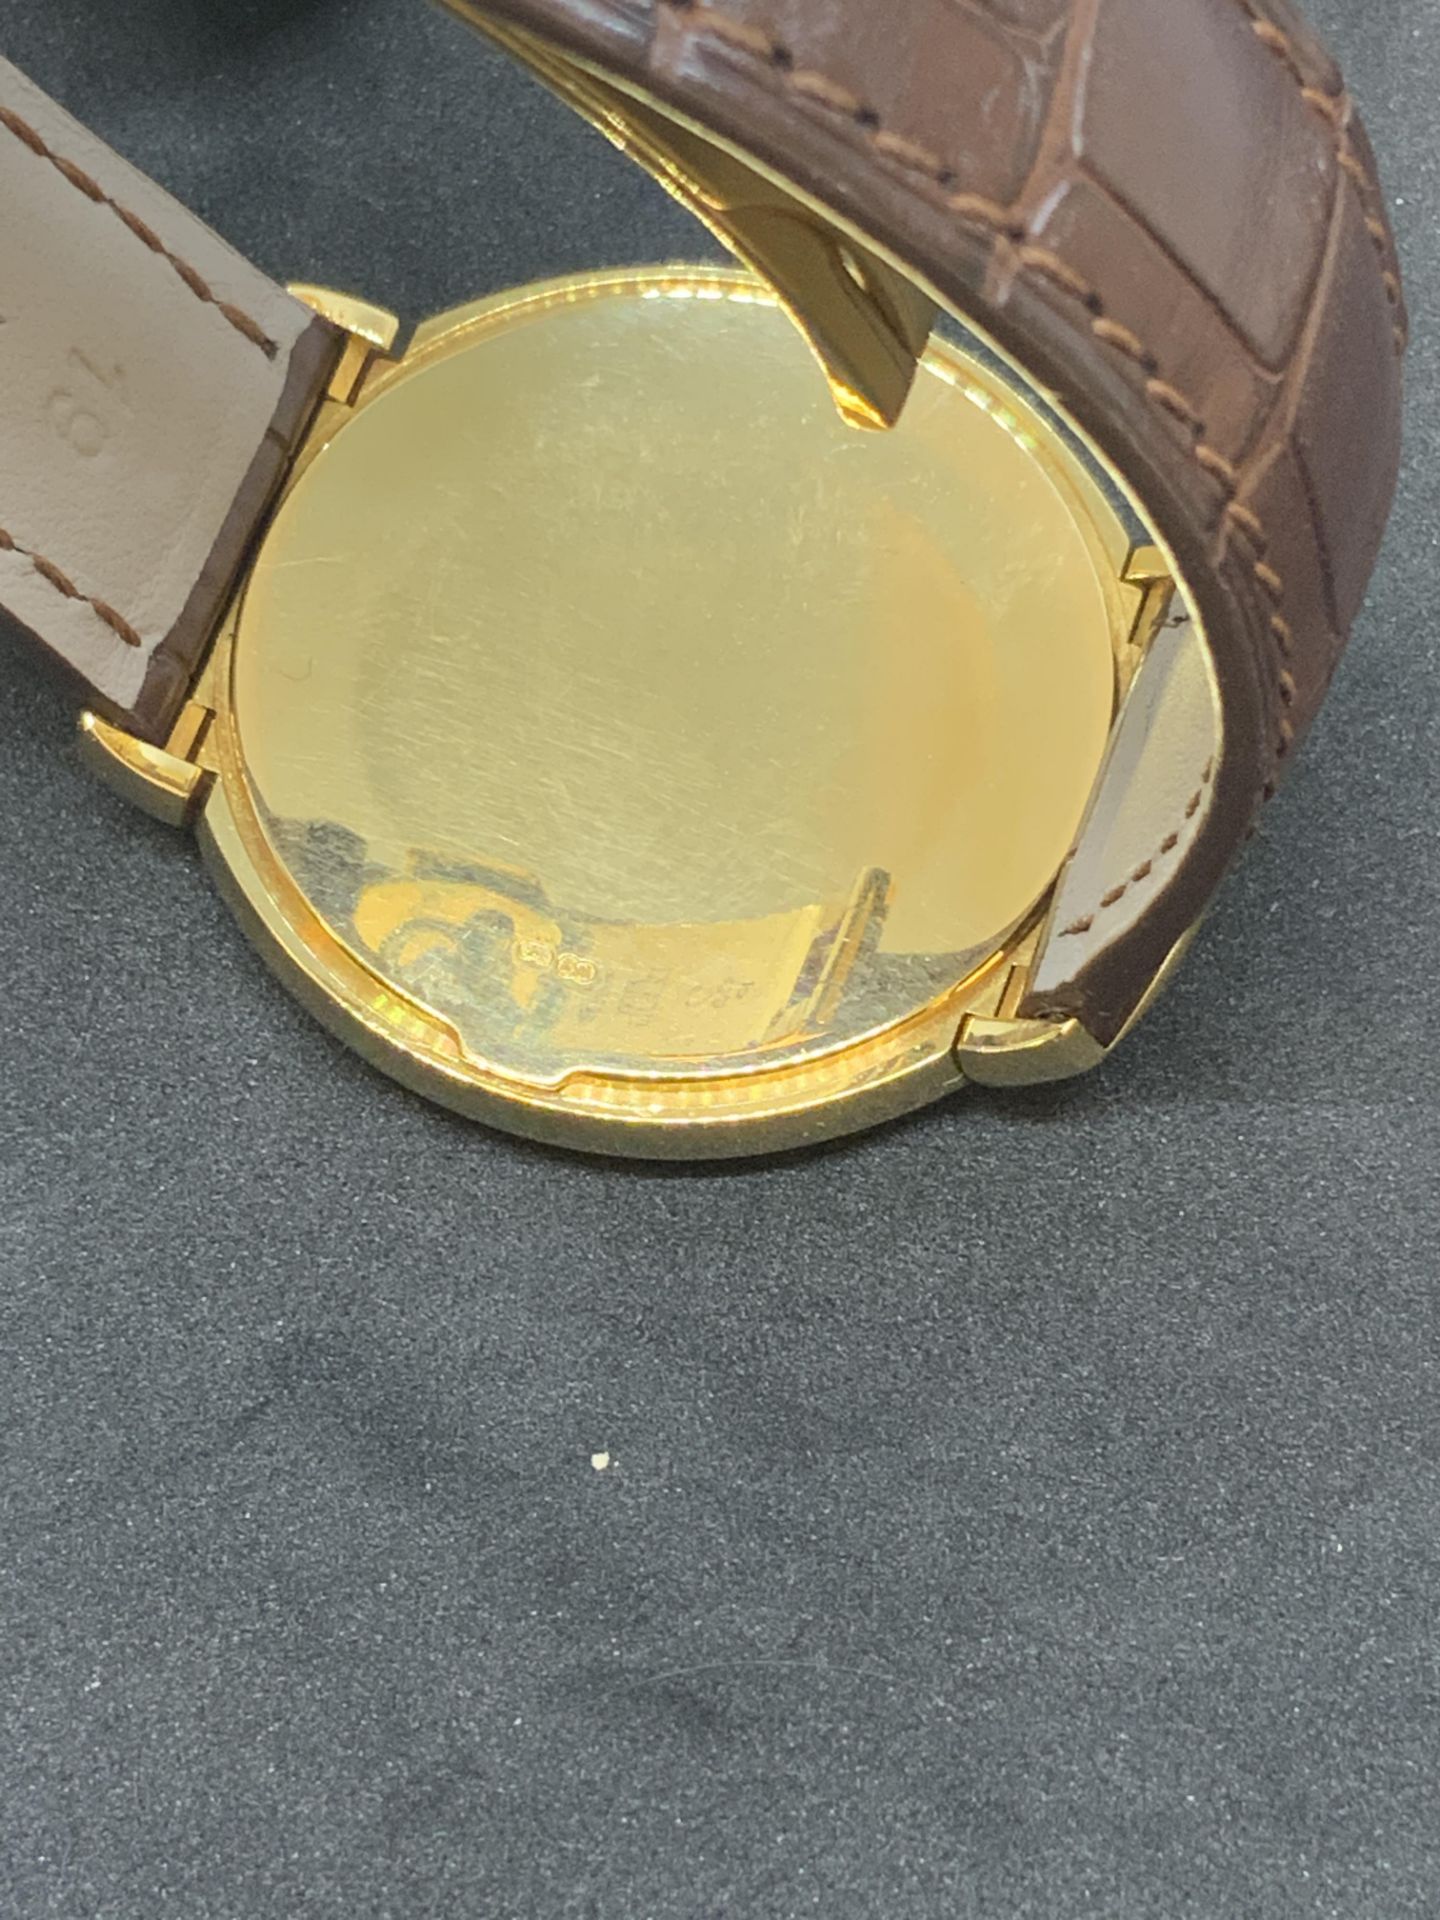 Rolex Cellini Quartz 37mm, White Roman Dial - Yellow Gold on Strap - 1993 - Image 6 of 11